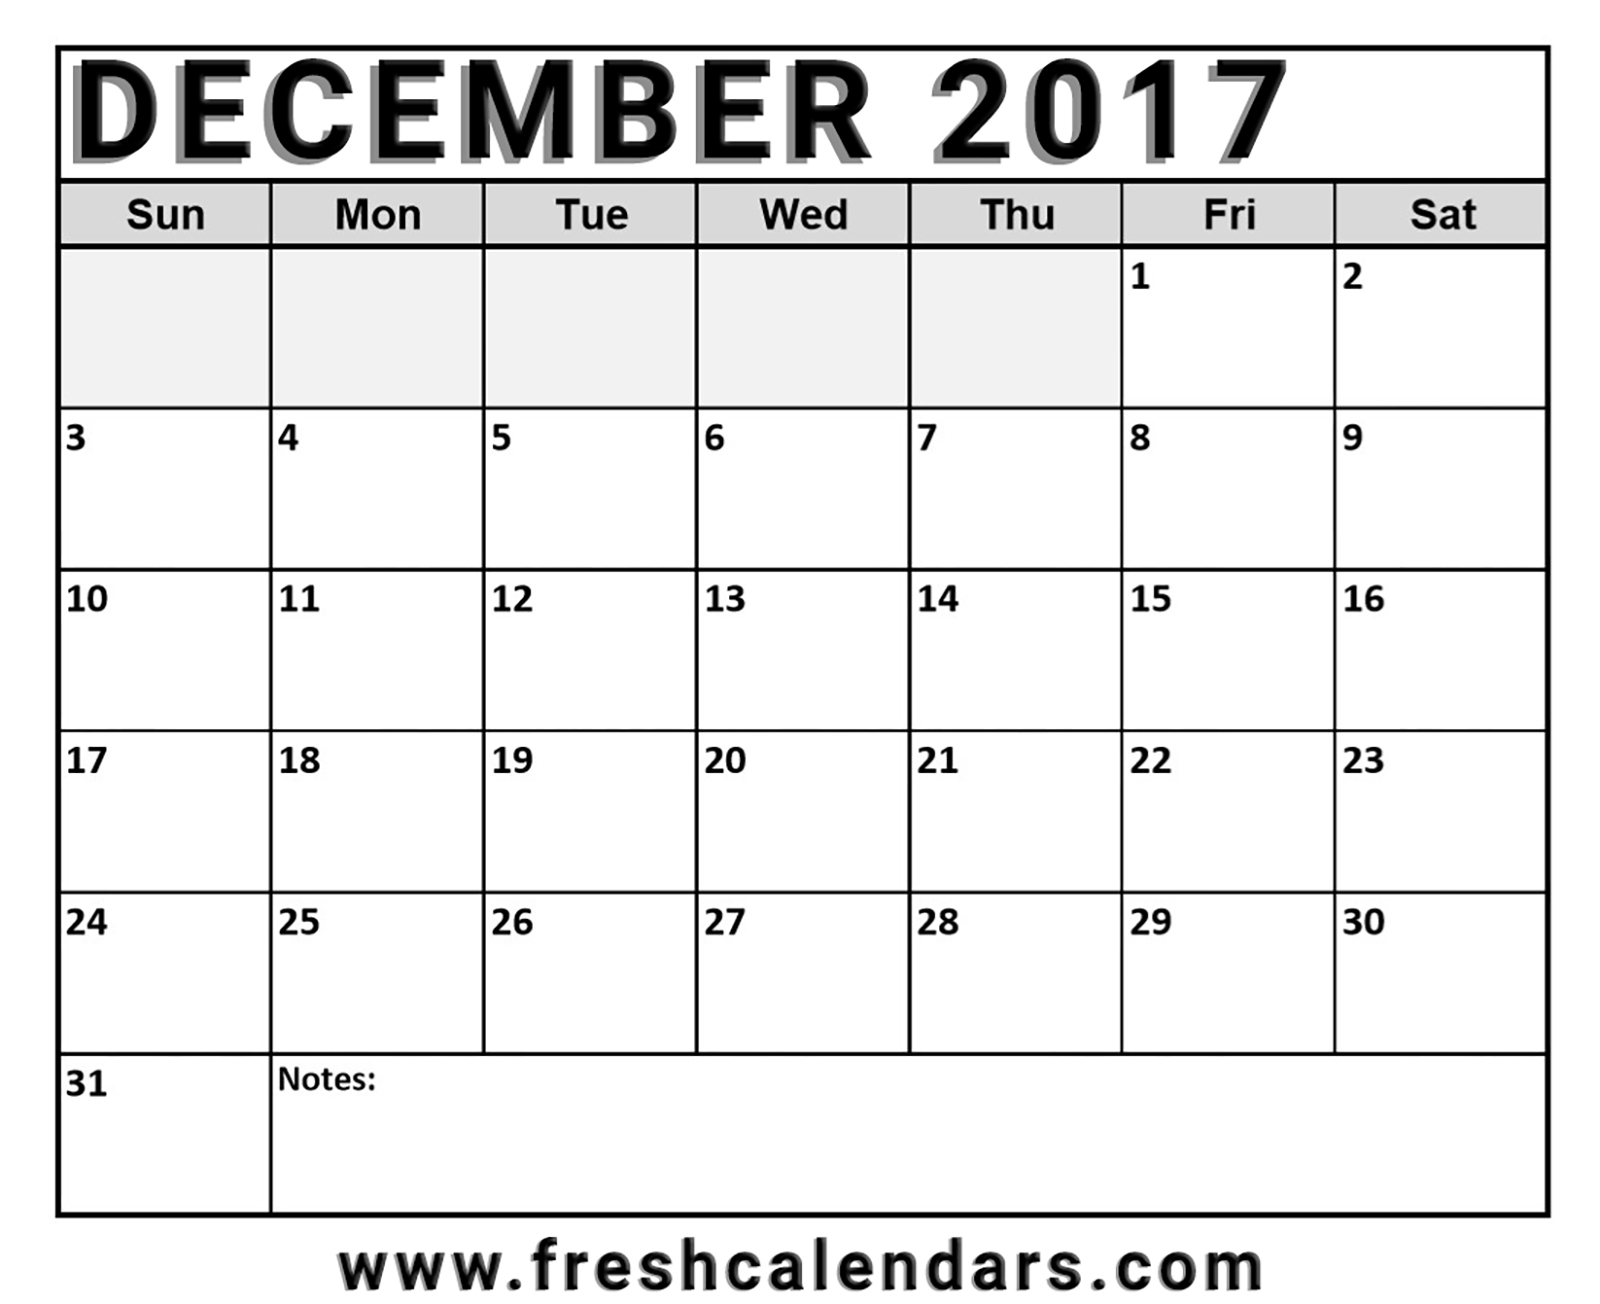 december 2017 astrological calendar